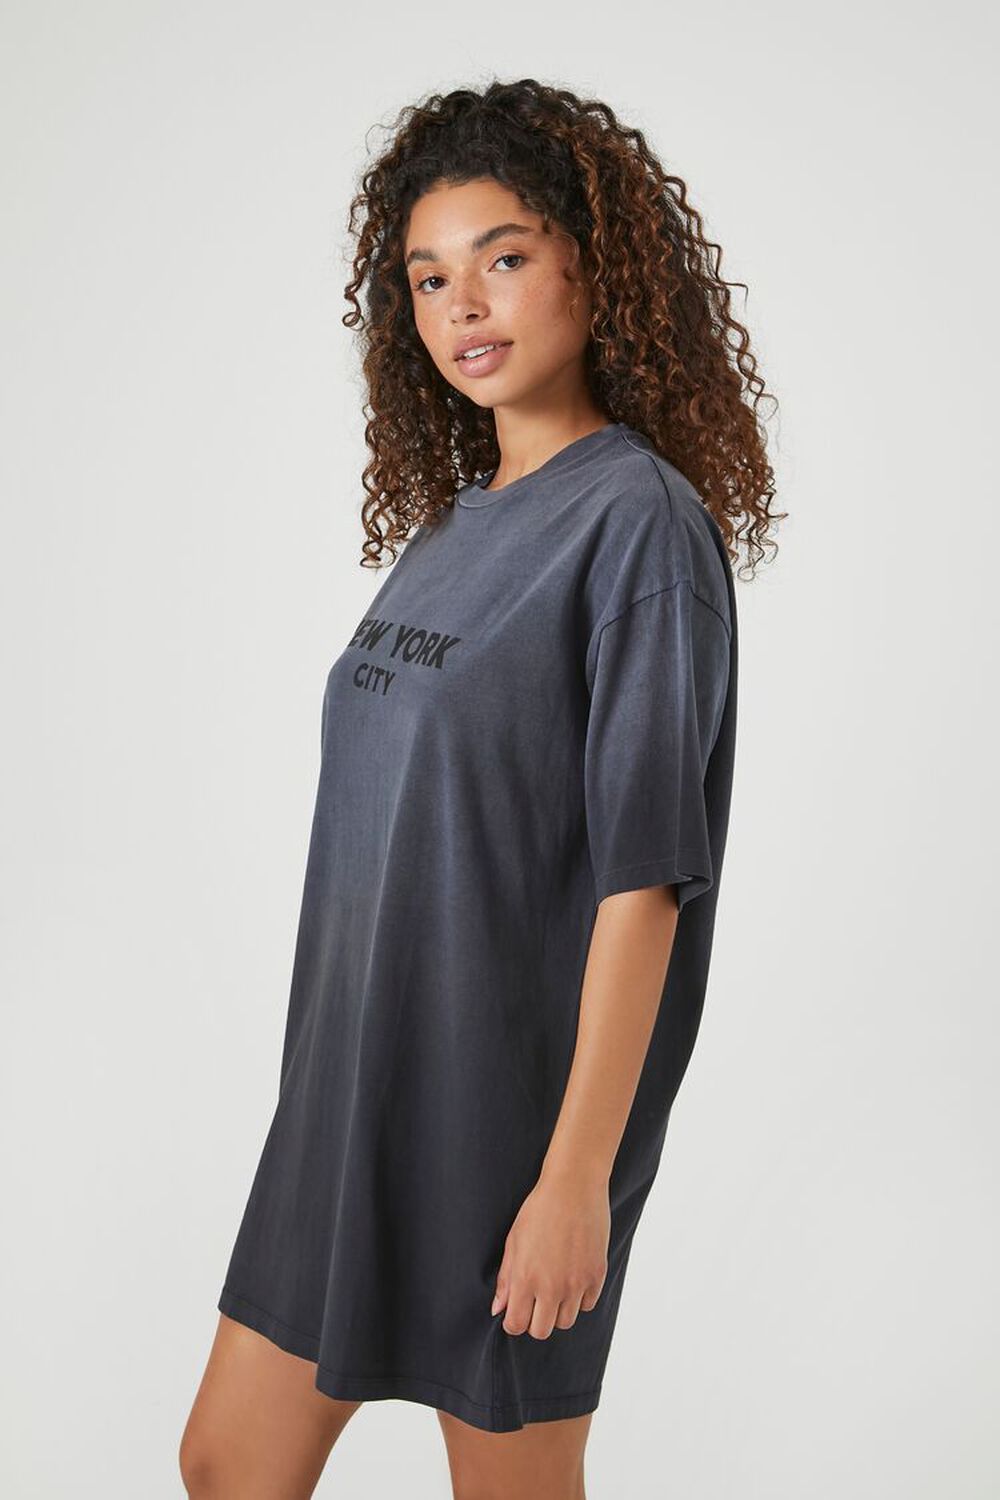 New York City Graphic T-Shirt Dress